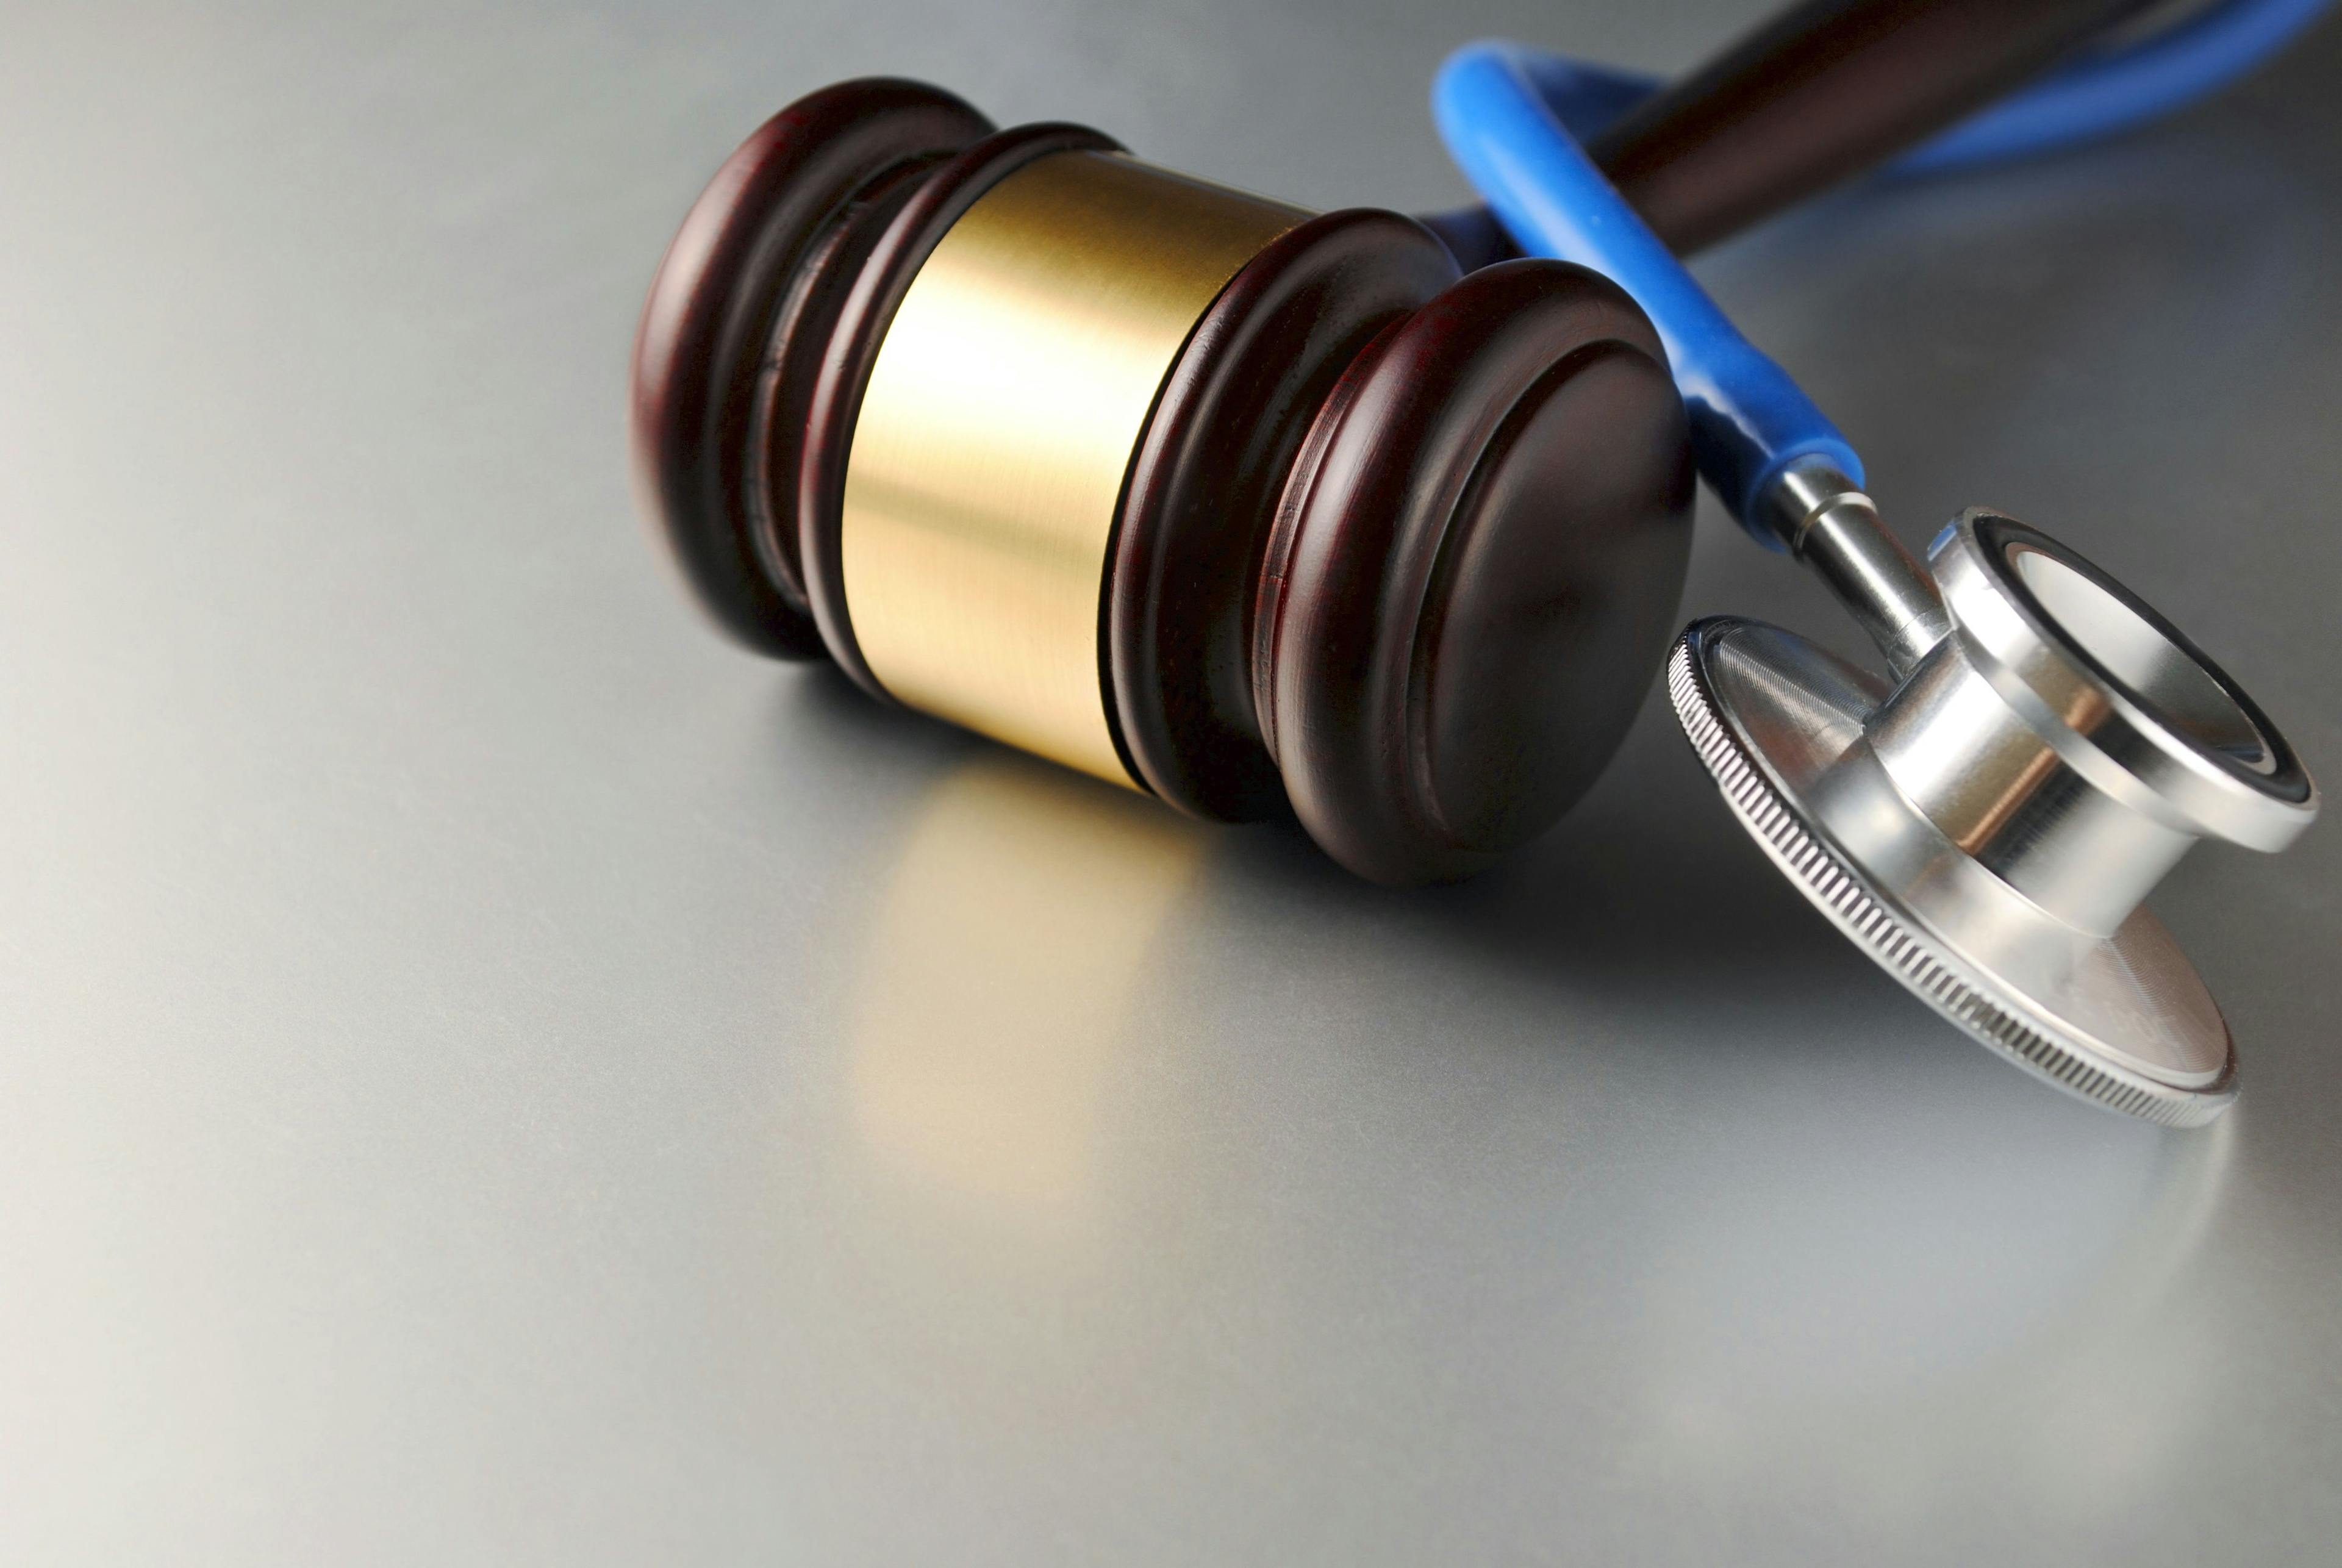 Vaccine Mandates Present Potential Legal Questions for Pharmacies, Health Professionals